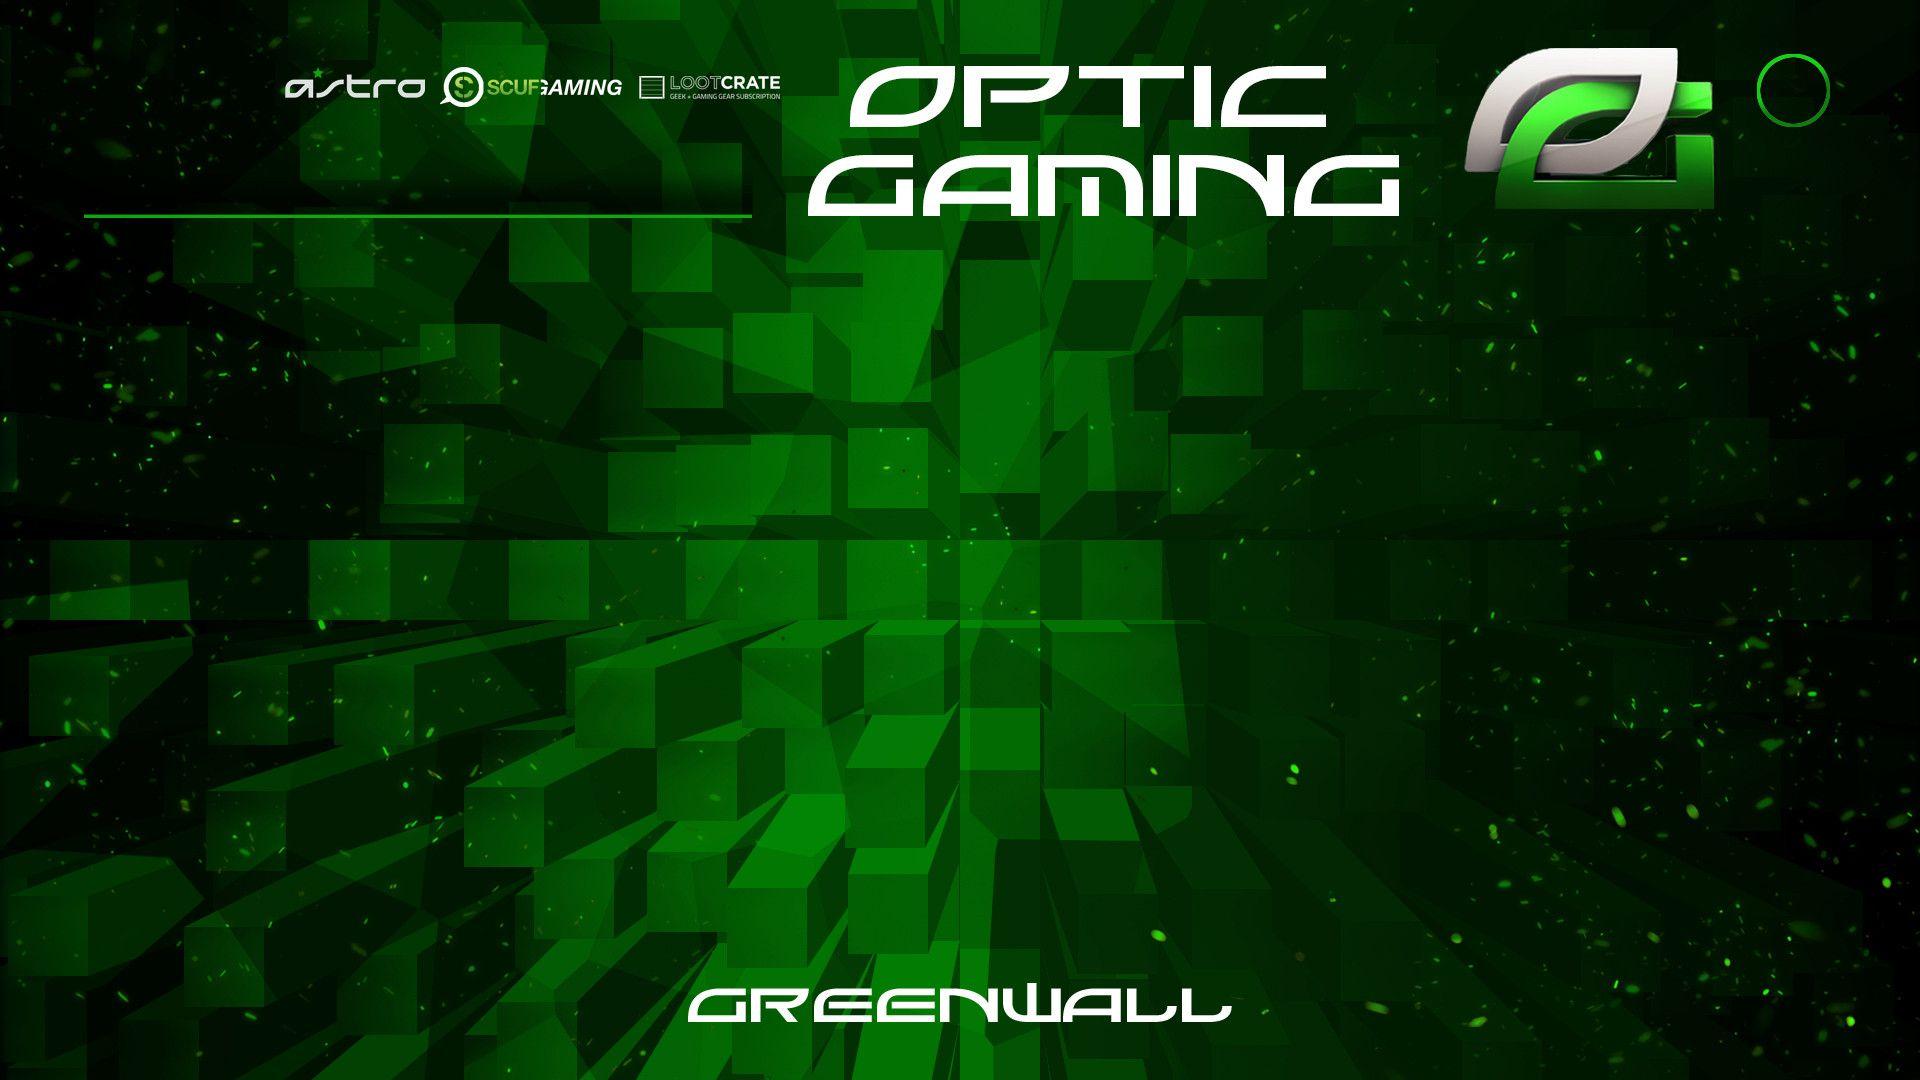 Xbox One dashboard background, OpTic style